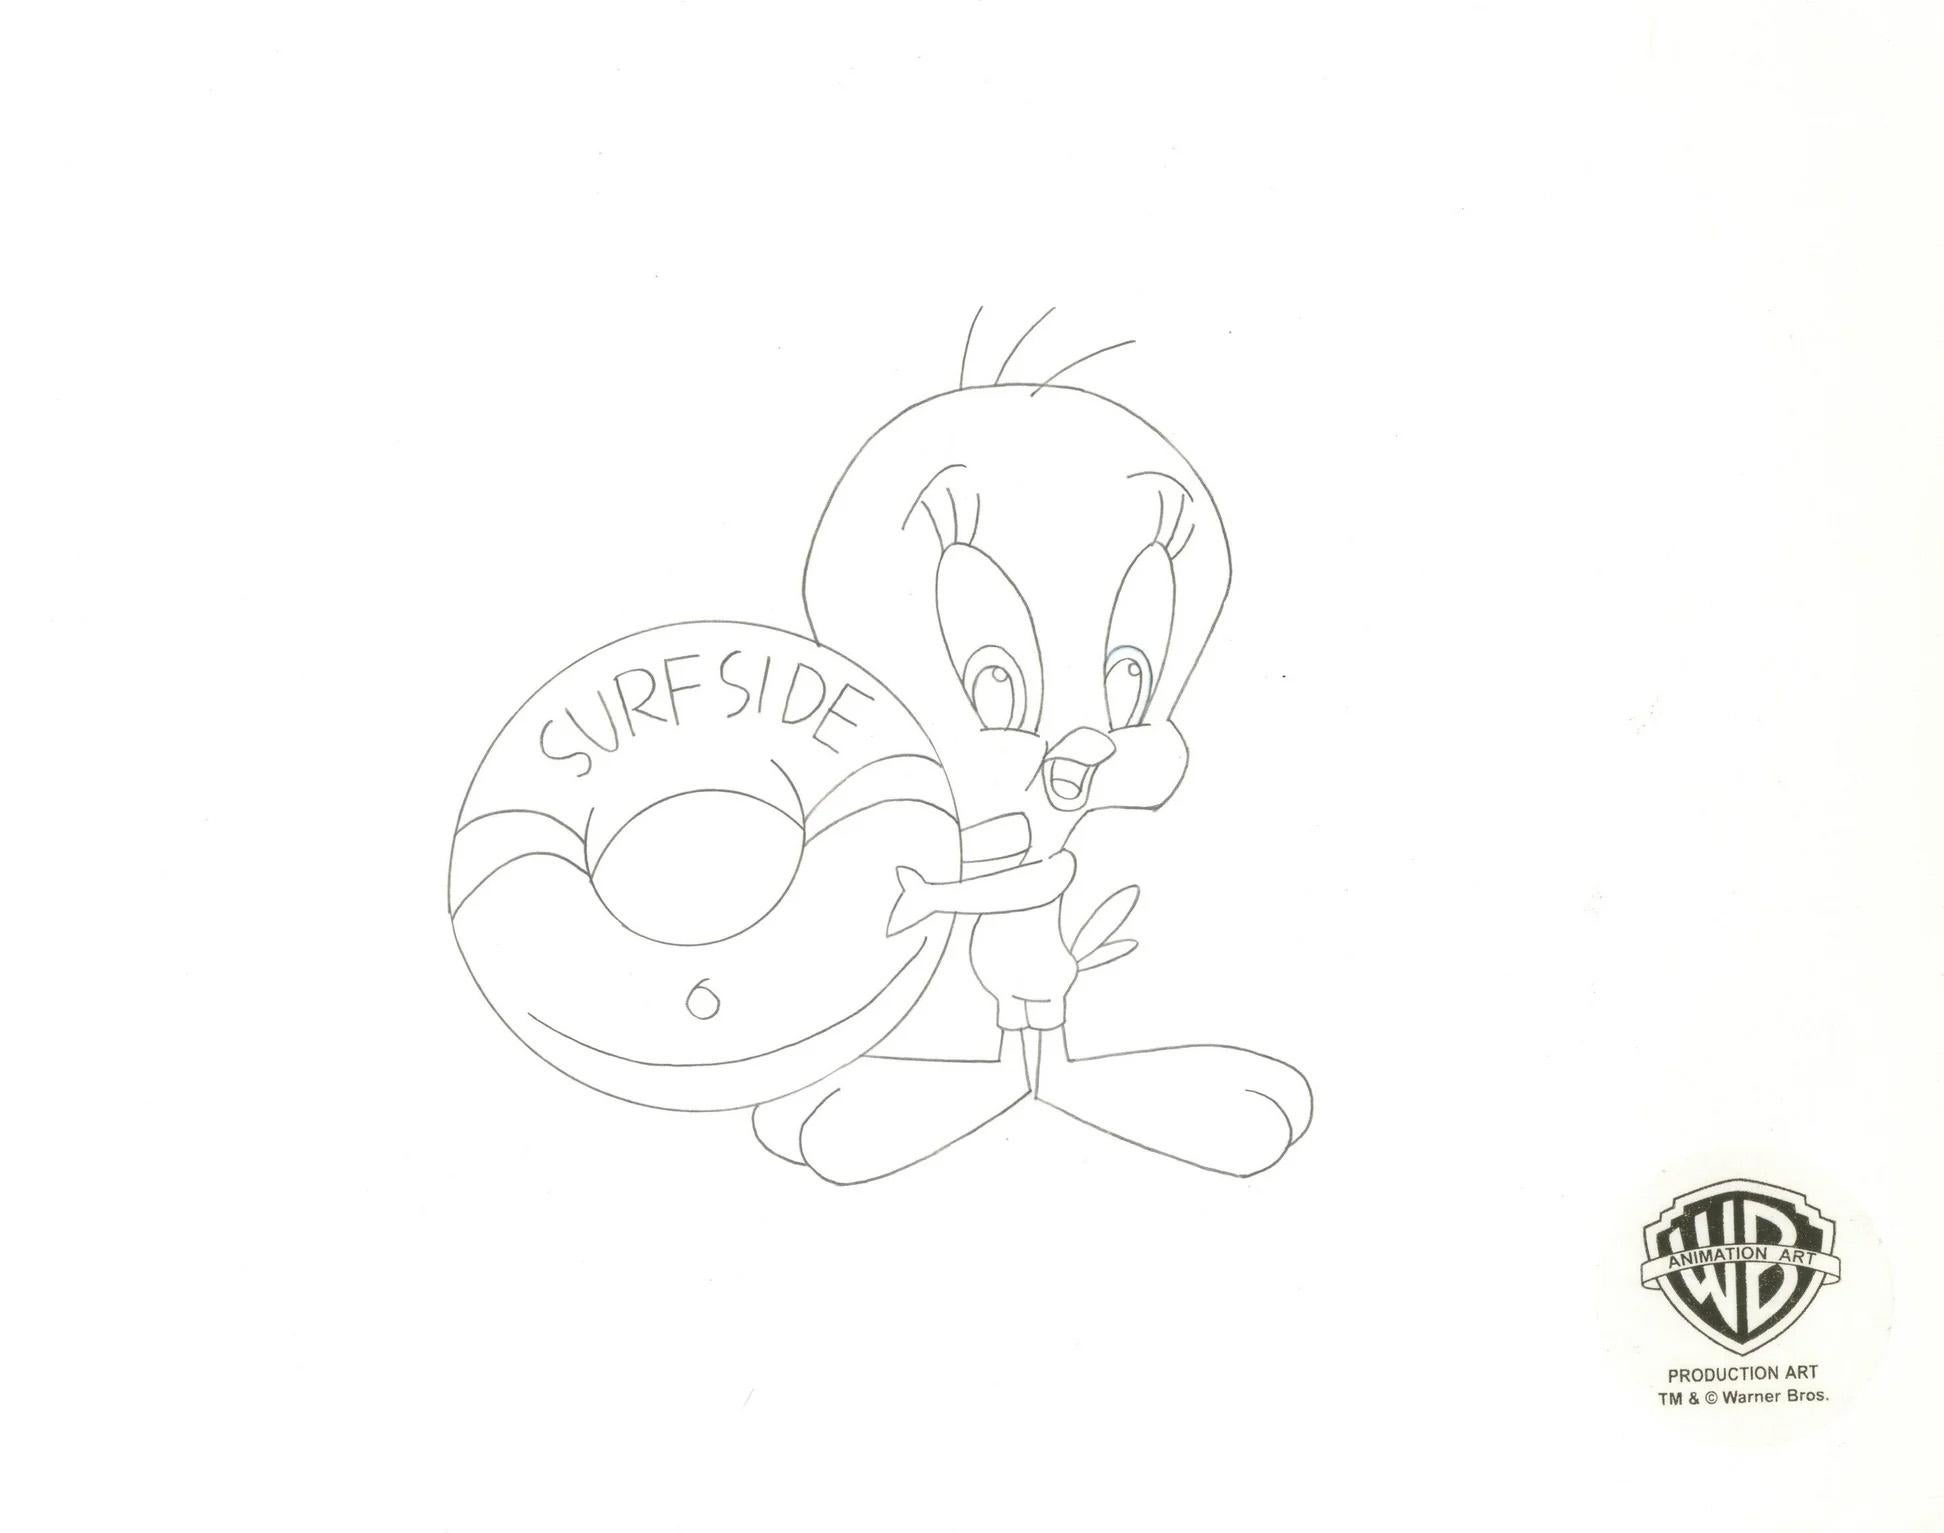 Sylvester and Tweety Mysteries Original Production Drawing: Tweety - Art by Warner Bros. Studio Artists